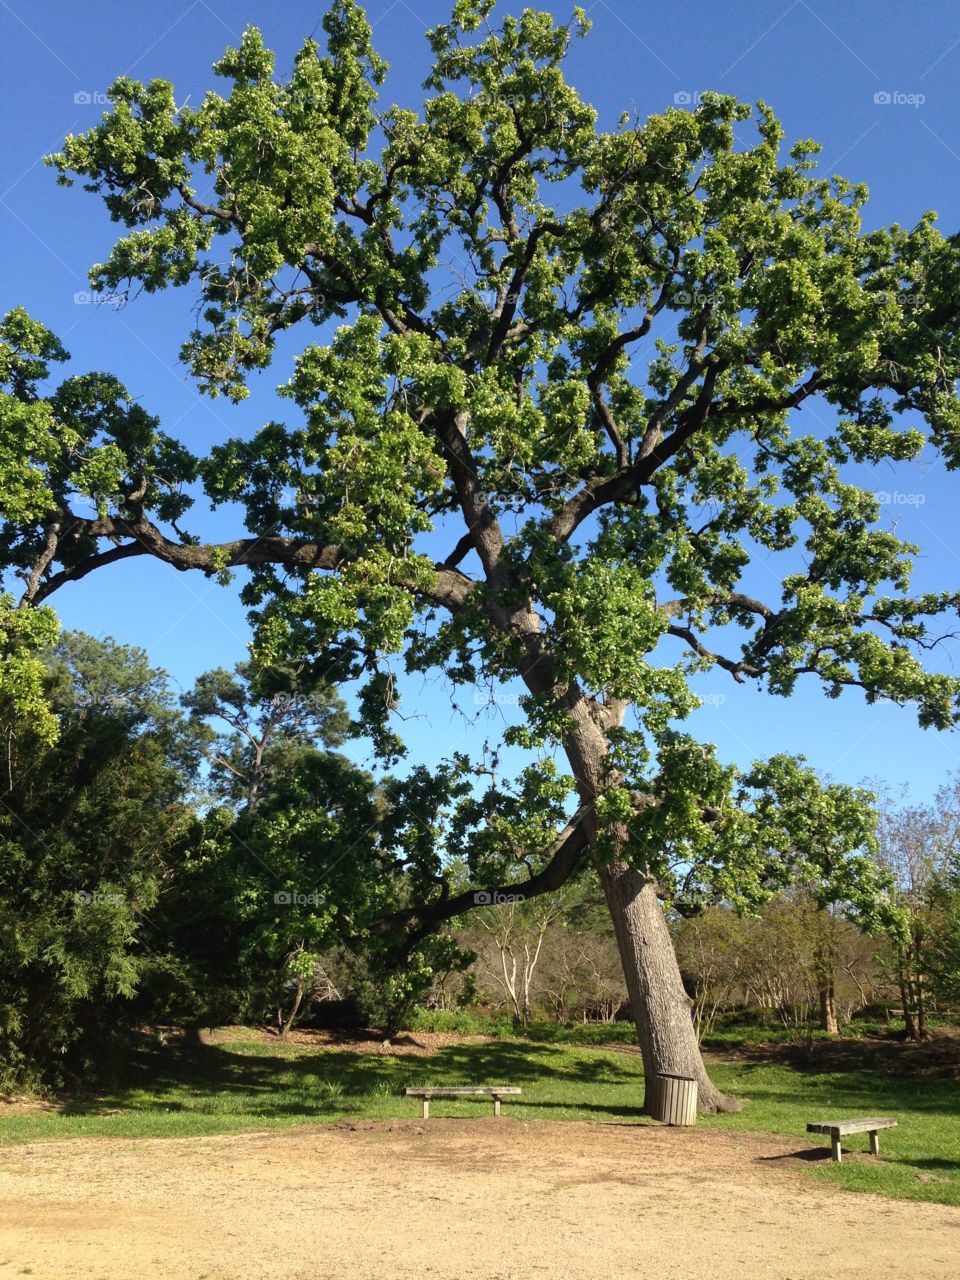 Large bonsai-like tree